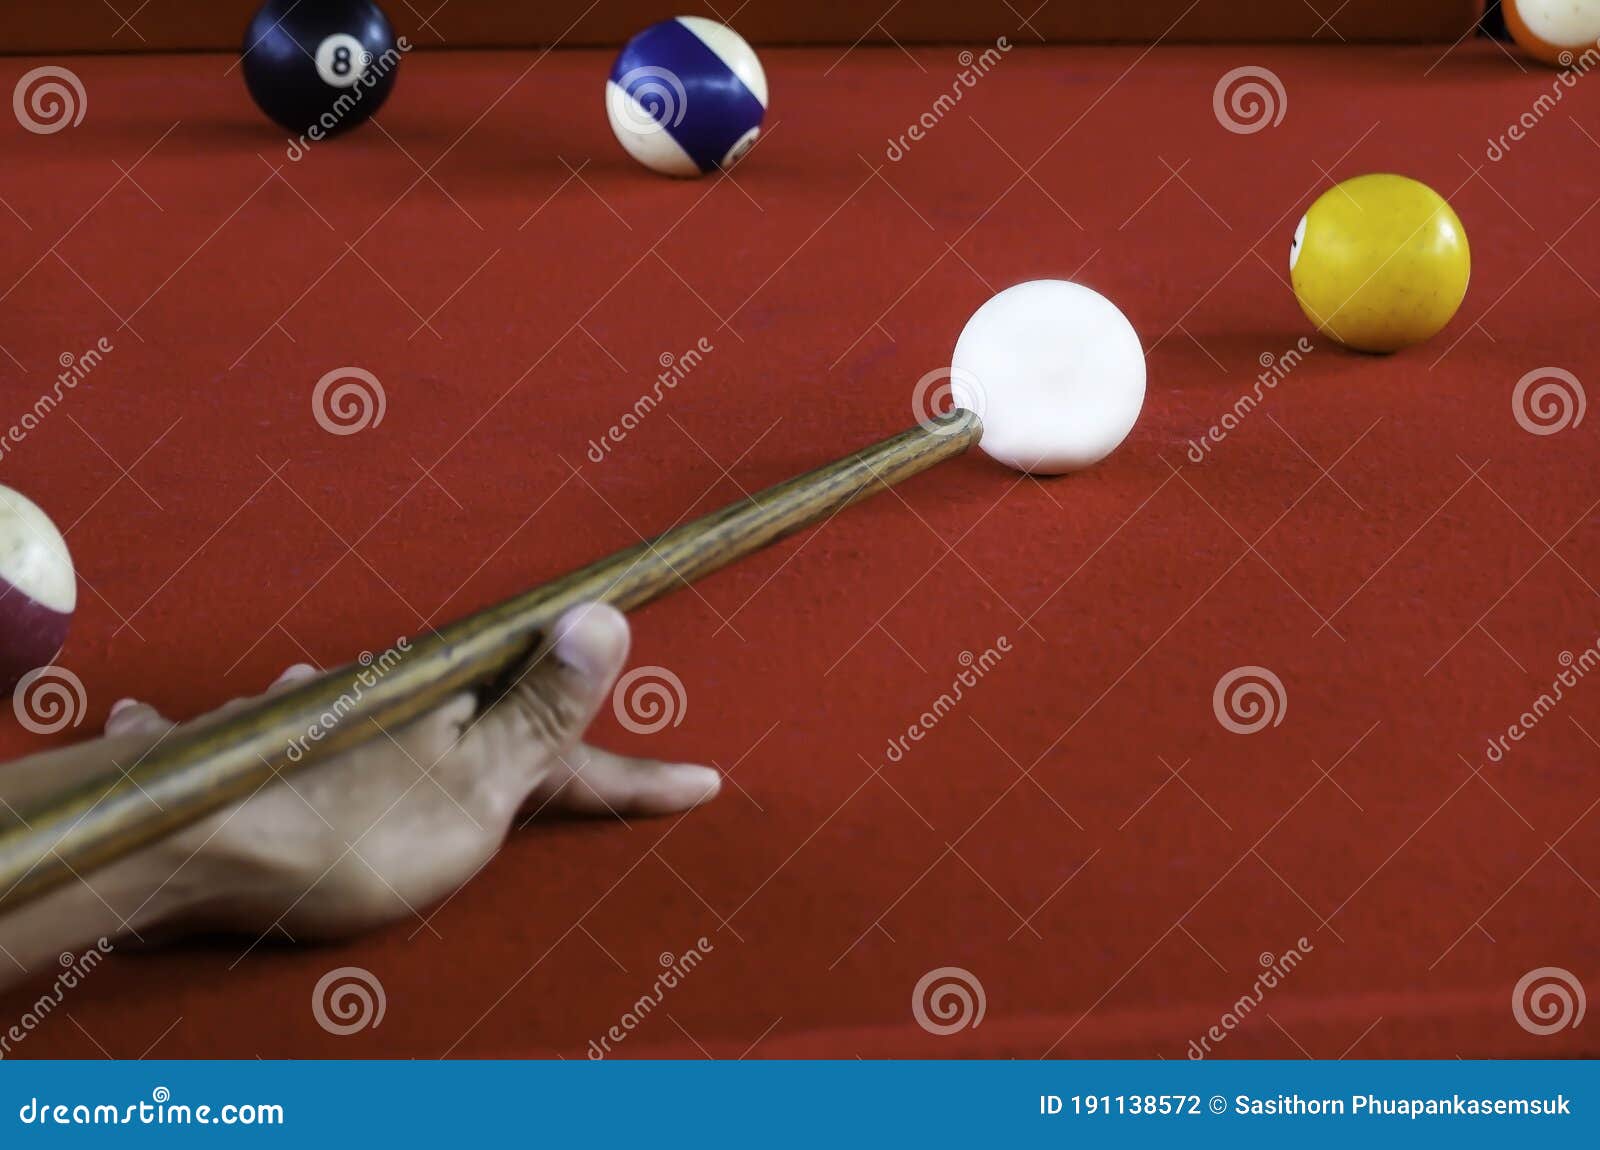 billards pool game on table pool cue and balls